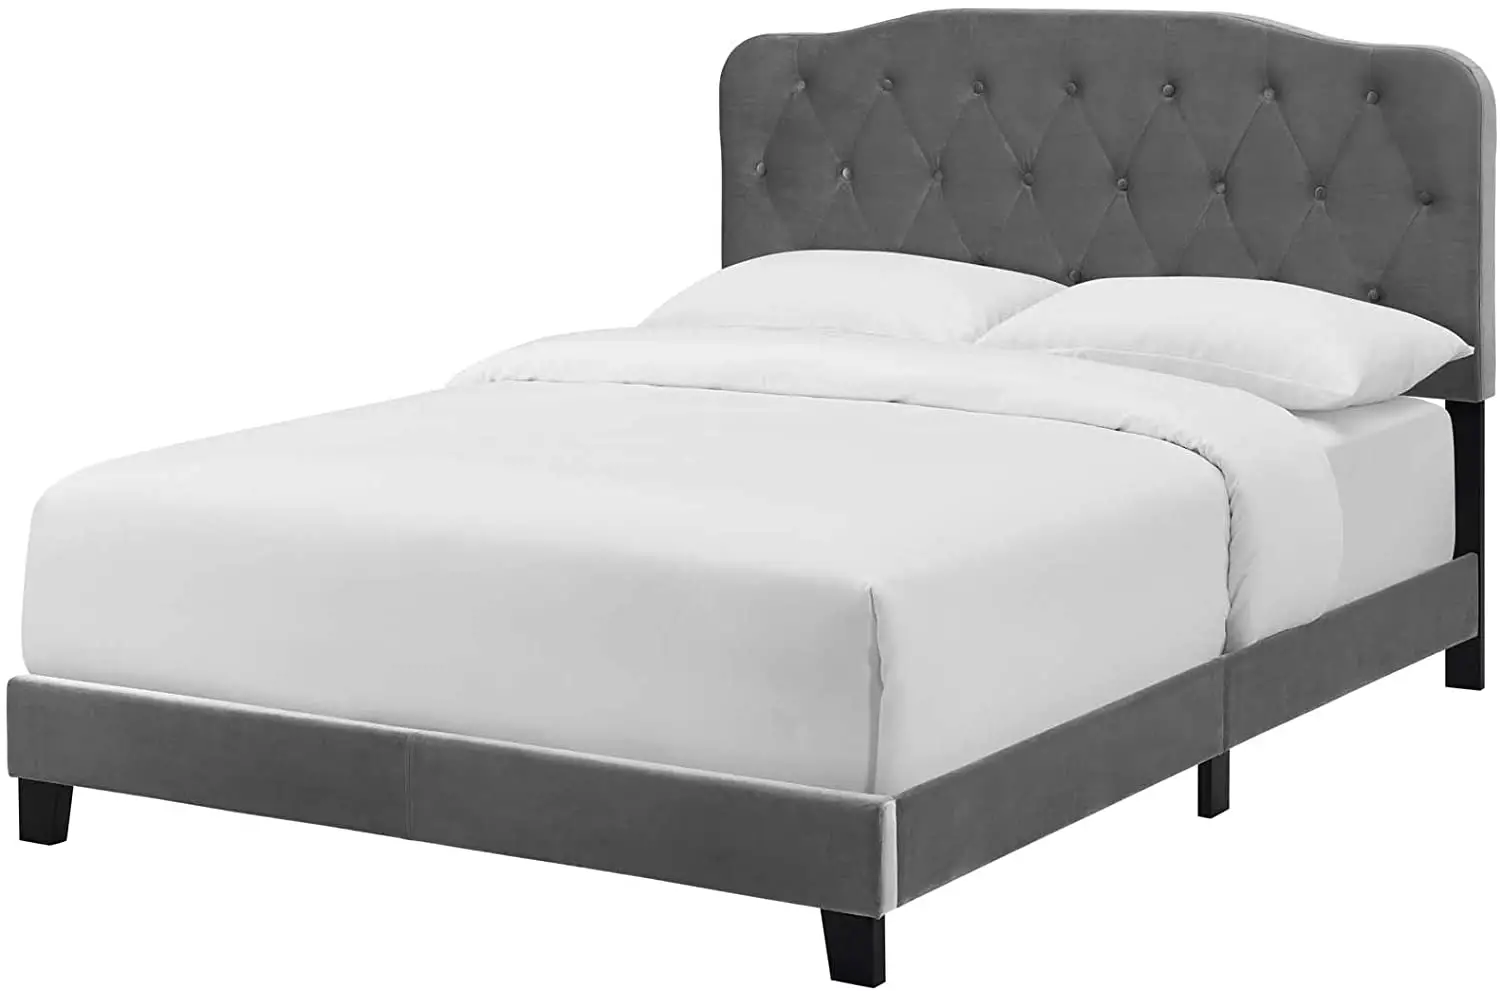 Modern Contemporary Urban Design Bedroom Platform King Size Bed Frame, Velvet Fabric, Grey Gray